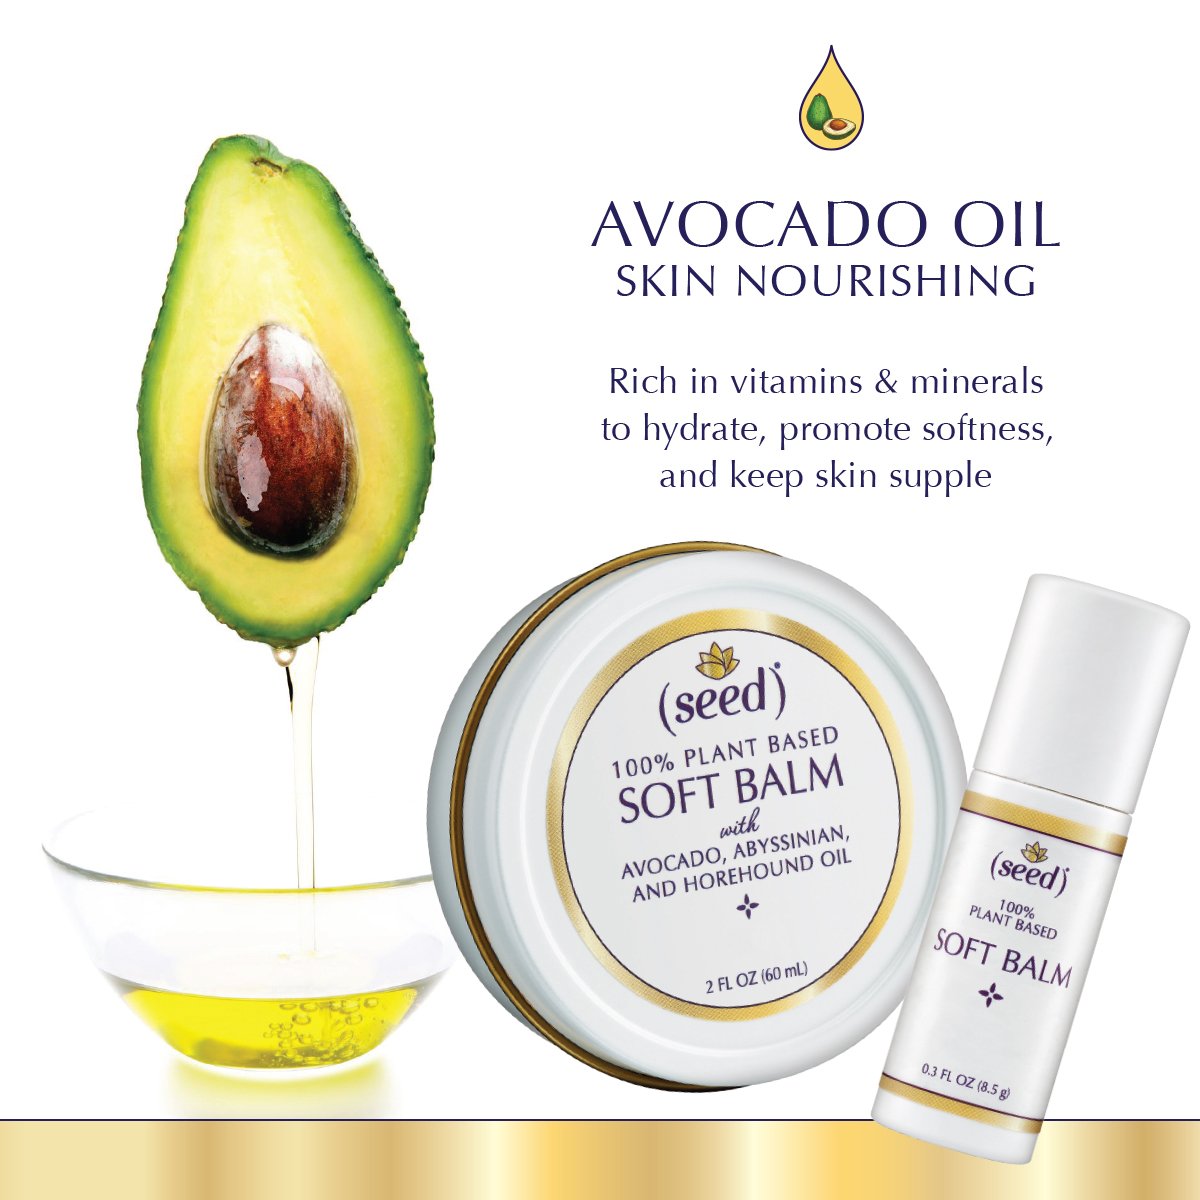 Seed Soft Balm features skin nourishing Avocado Oil